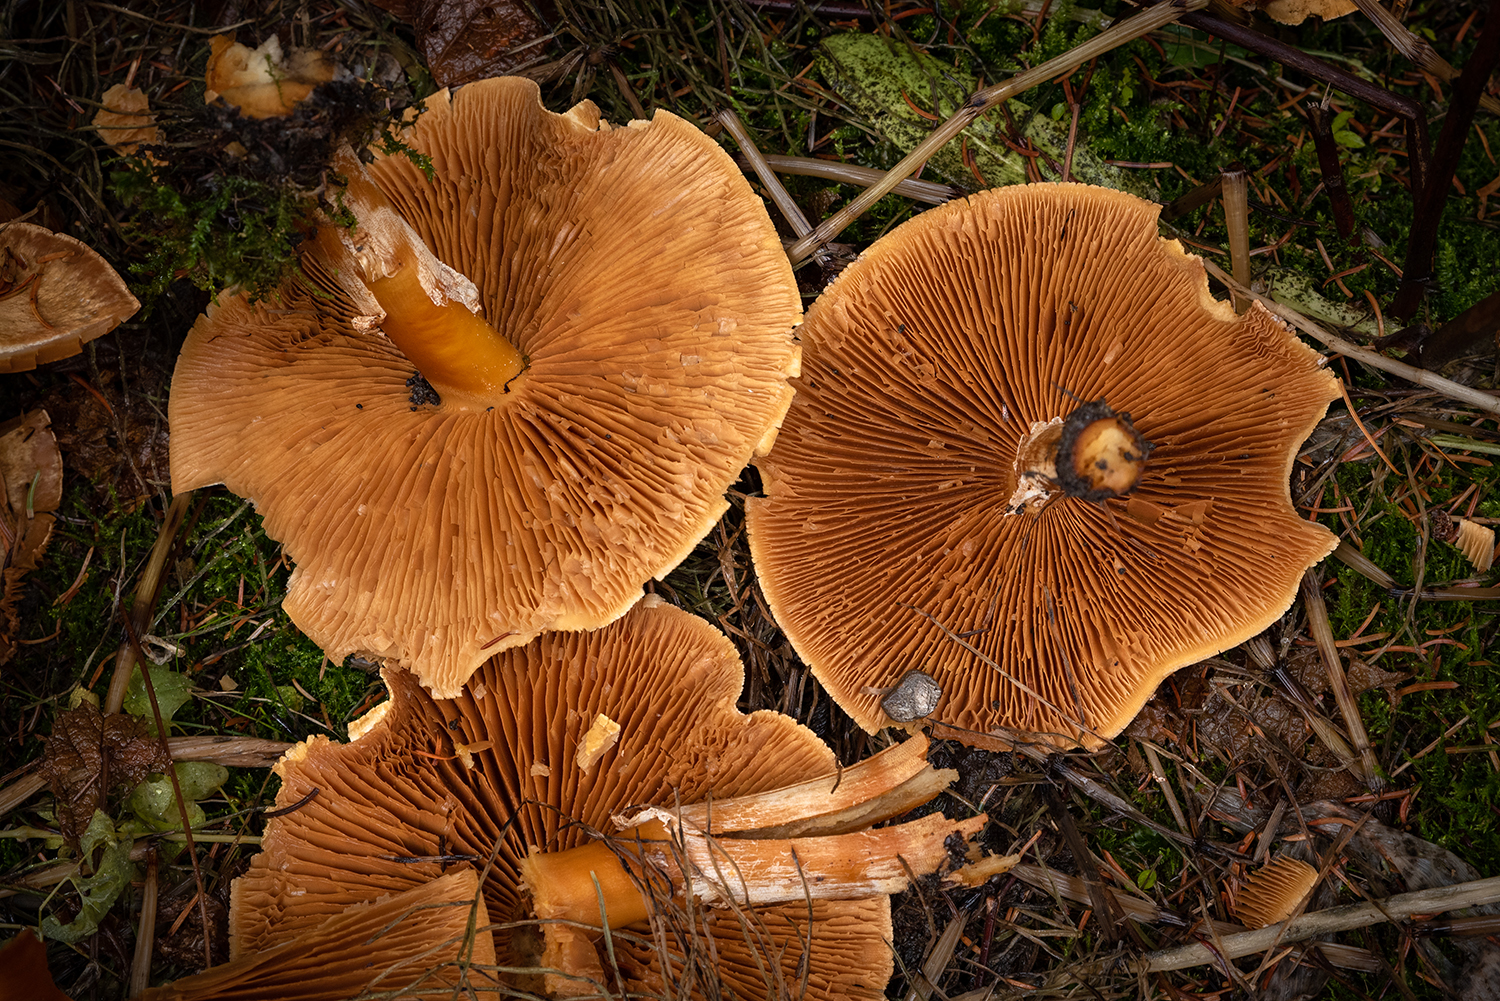 Kamloops Abstract mushrooms